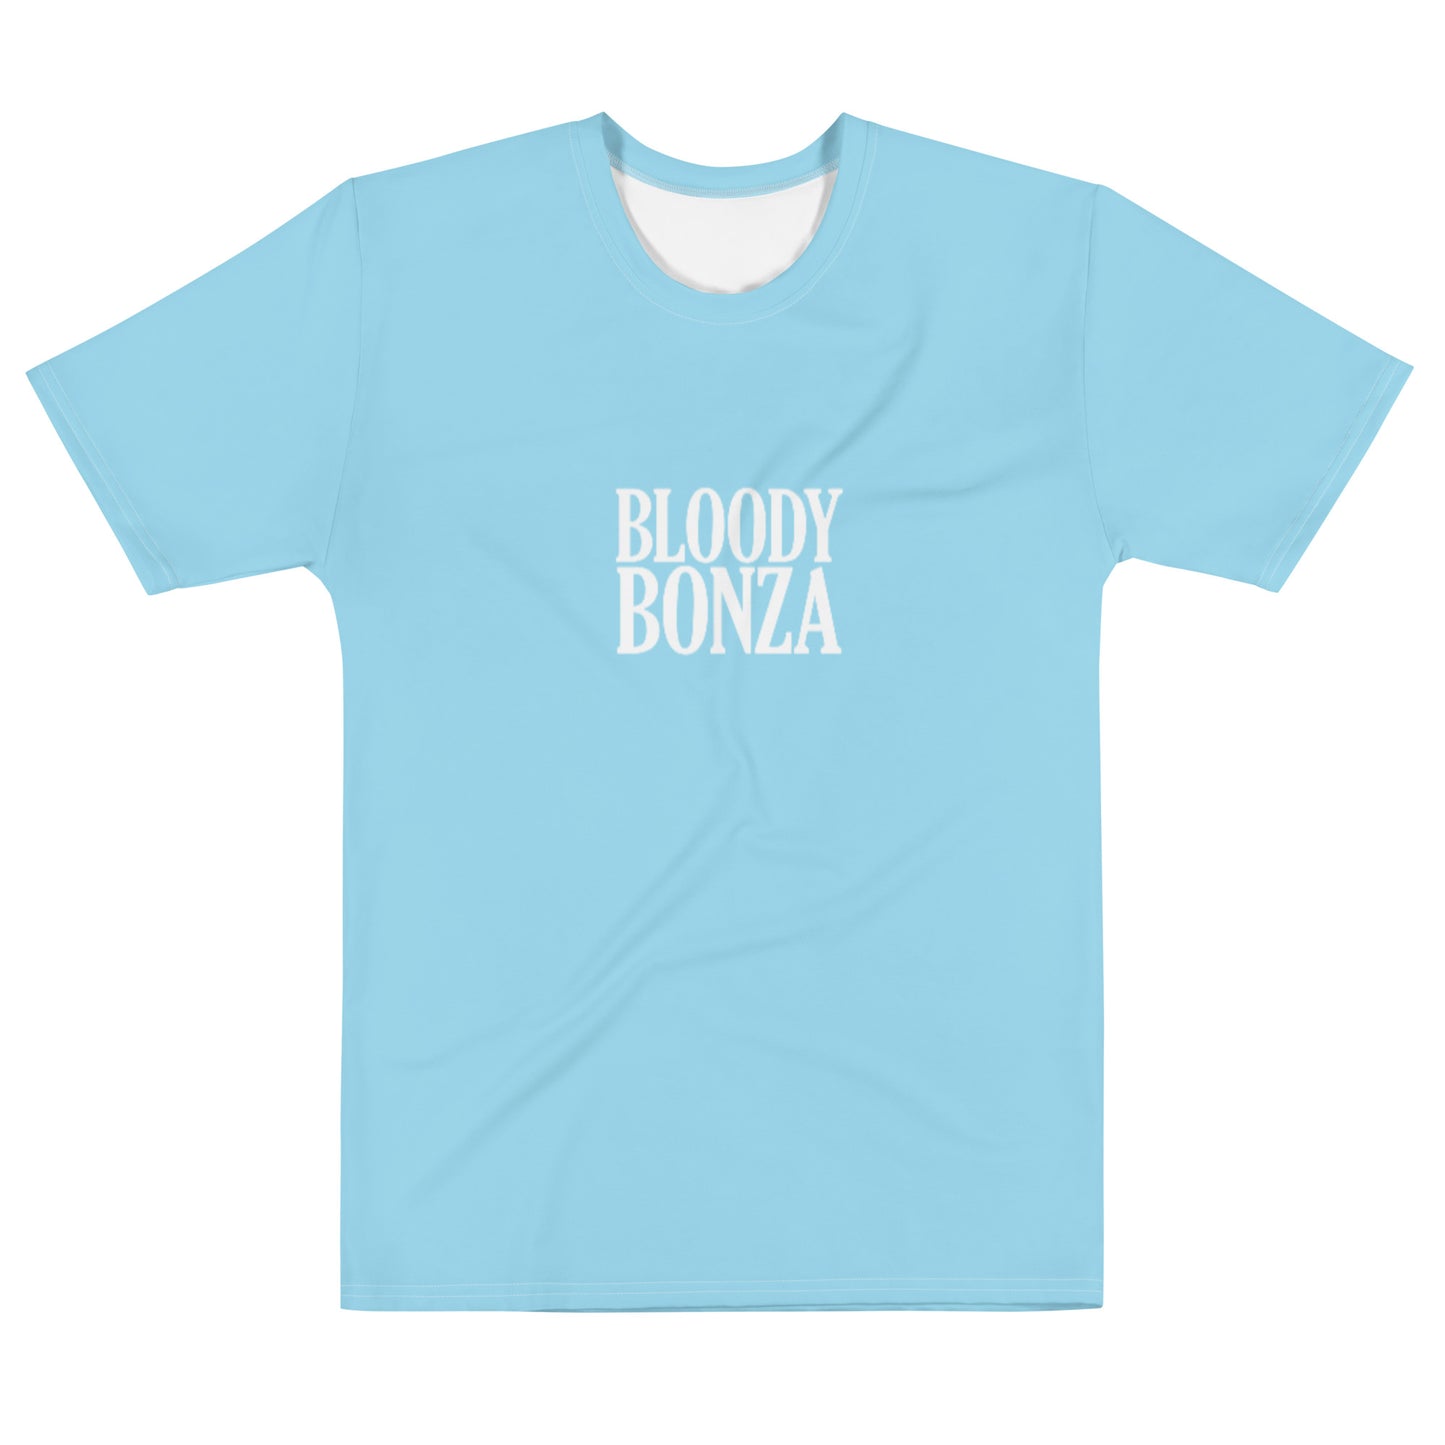 Bloody Bonza - Sustainably Made Men's Short Sleeve Tee